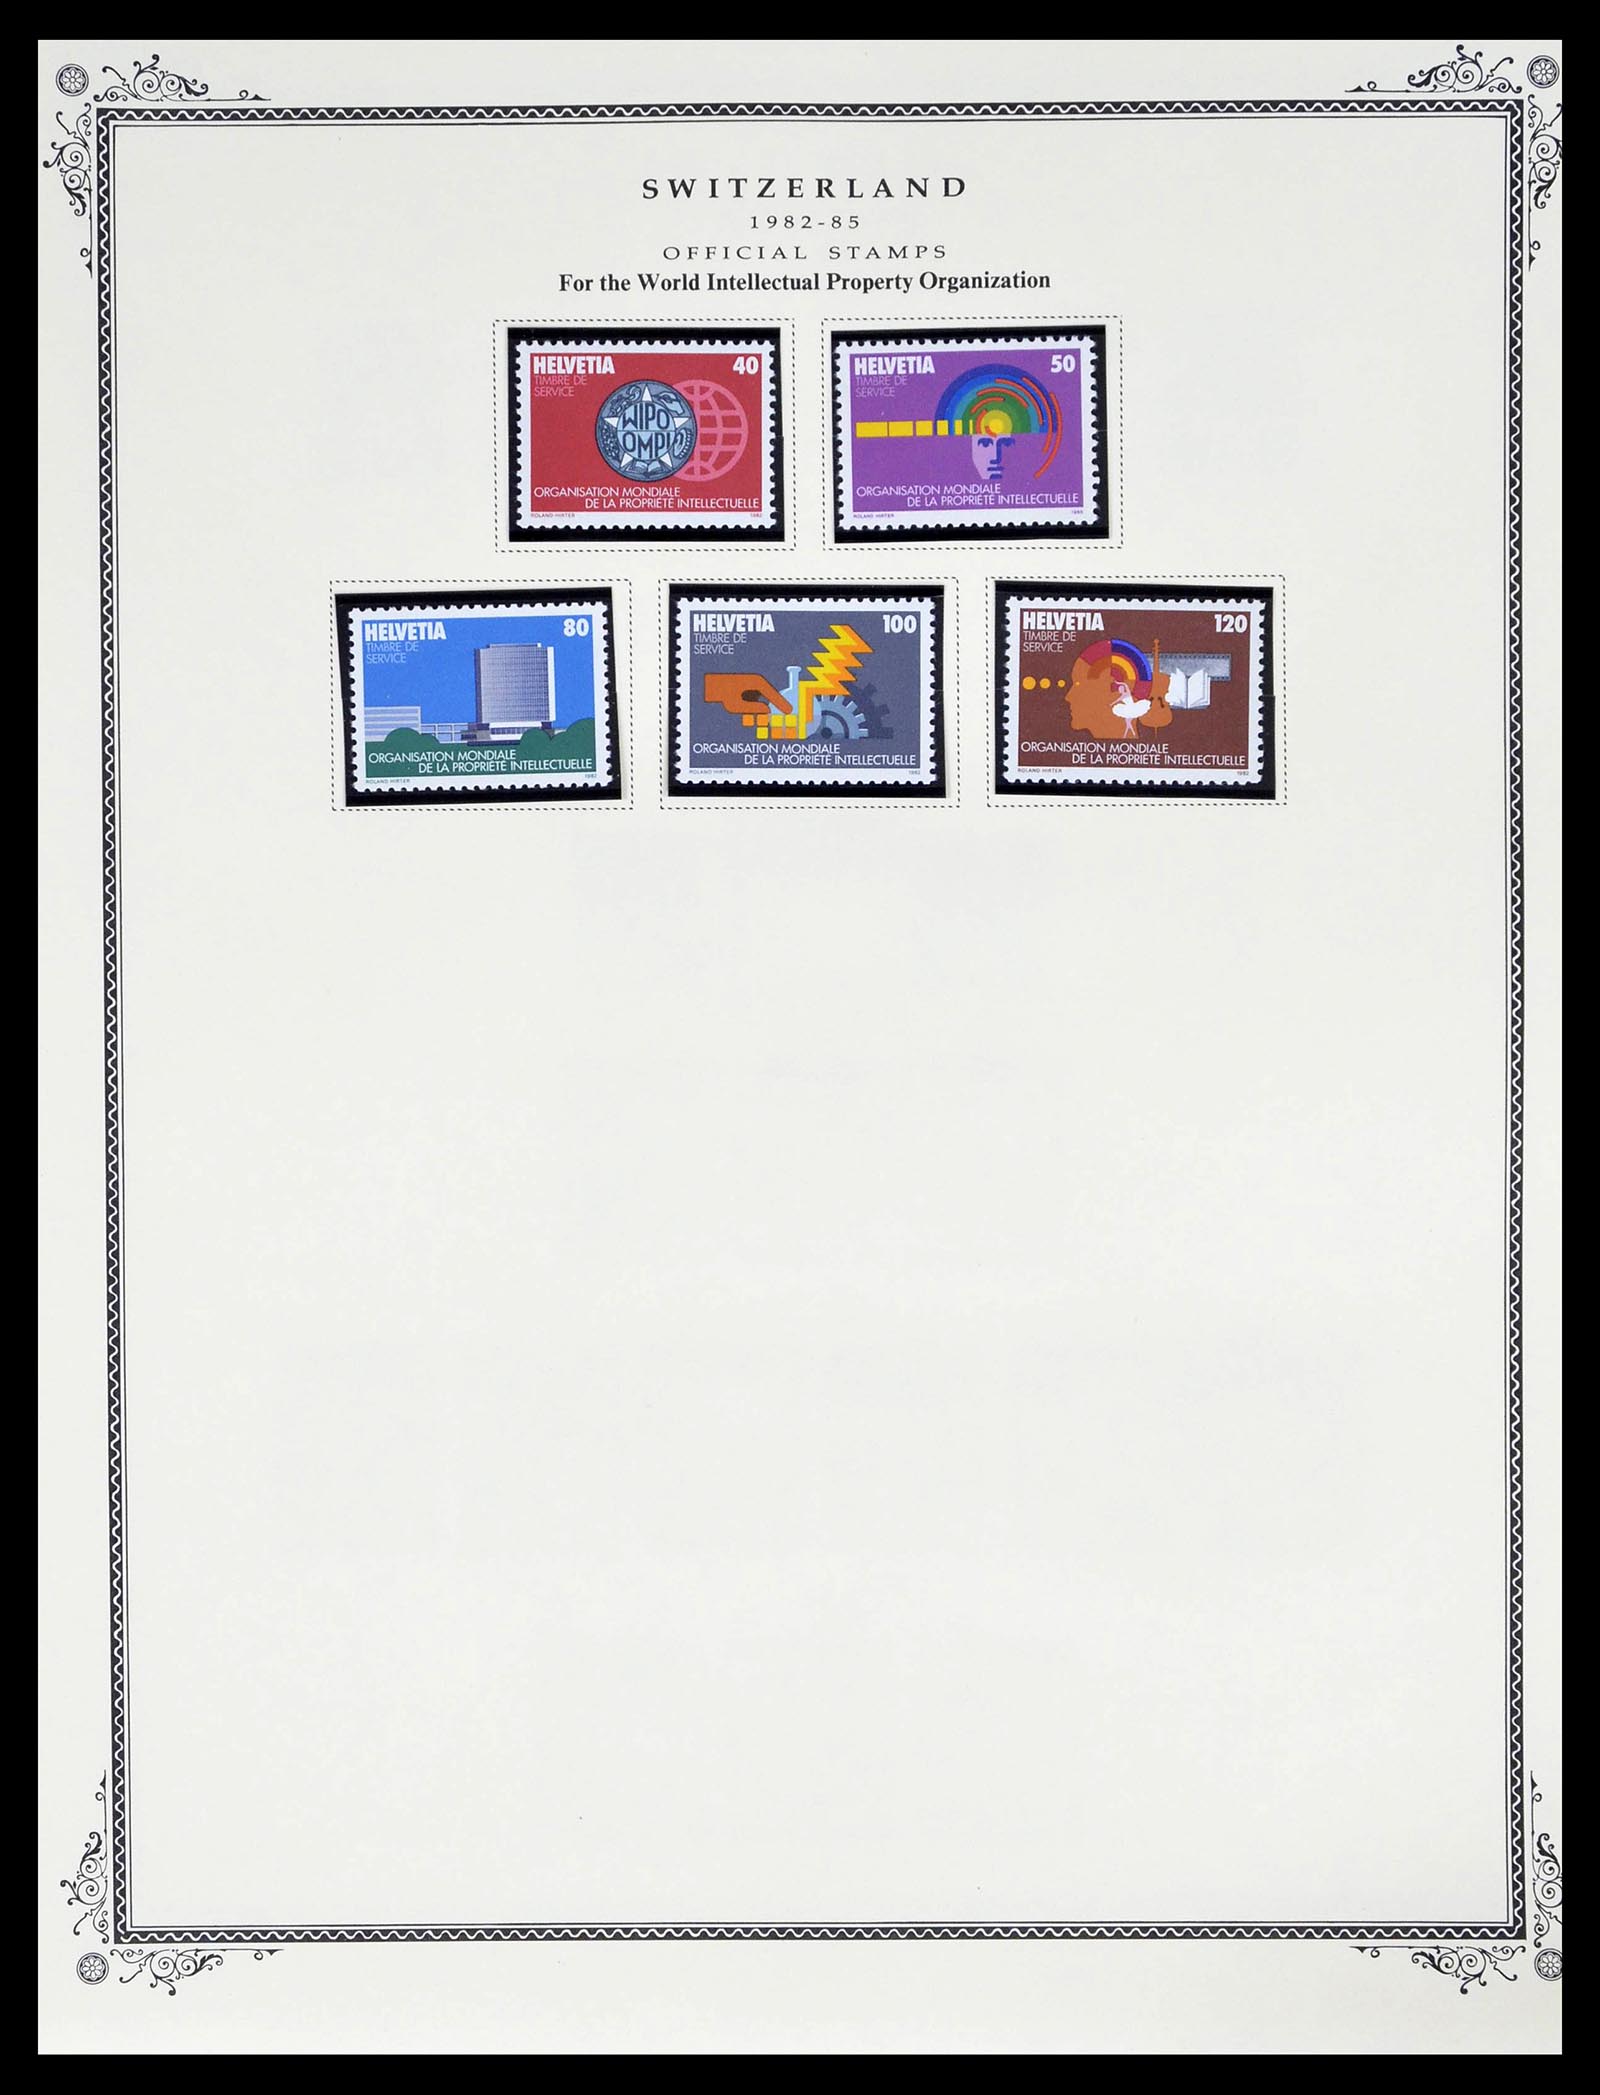 39178 0265 - Stamp collection 39178 Switzerland 1850-1989.